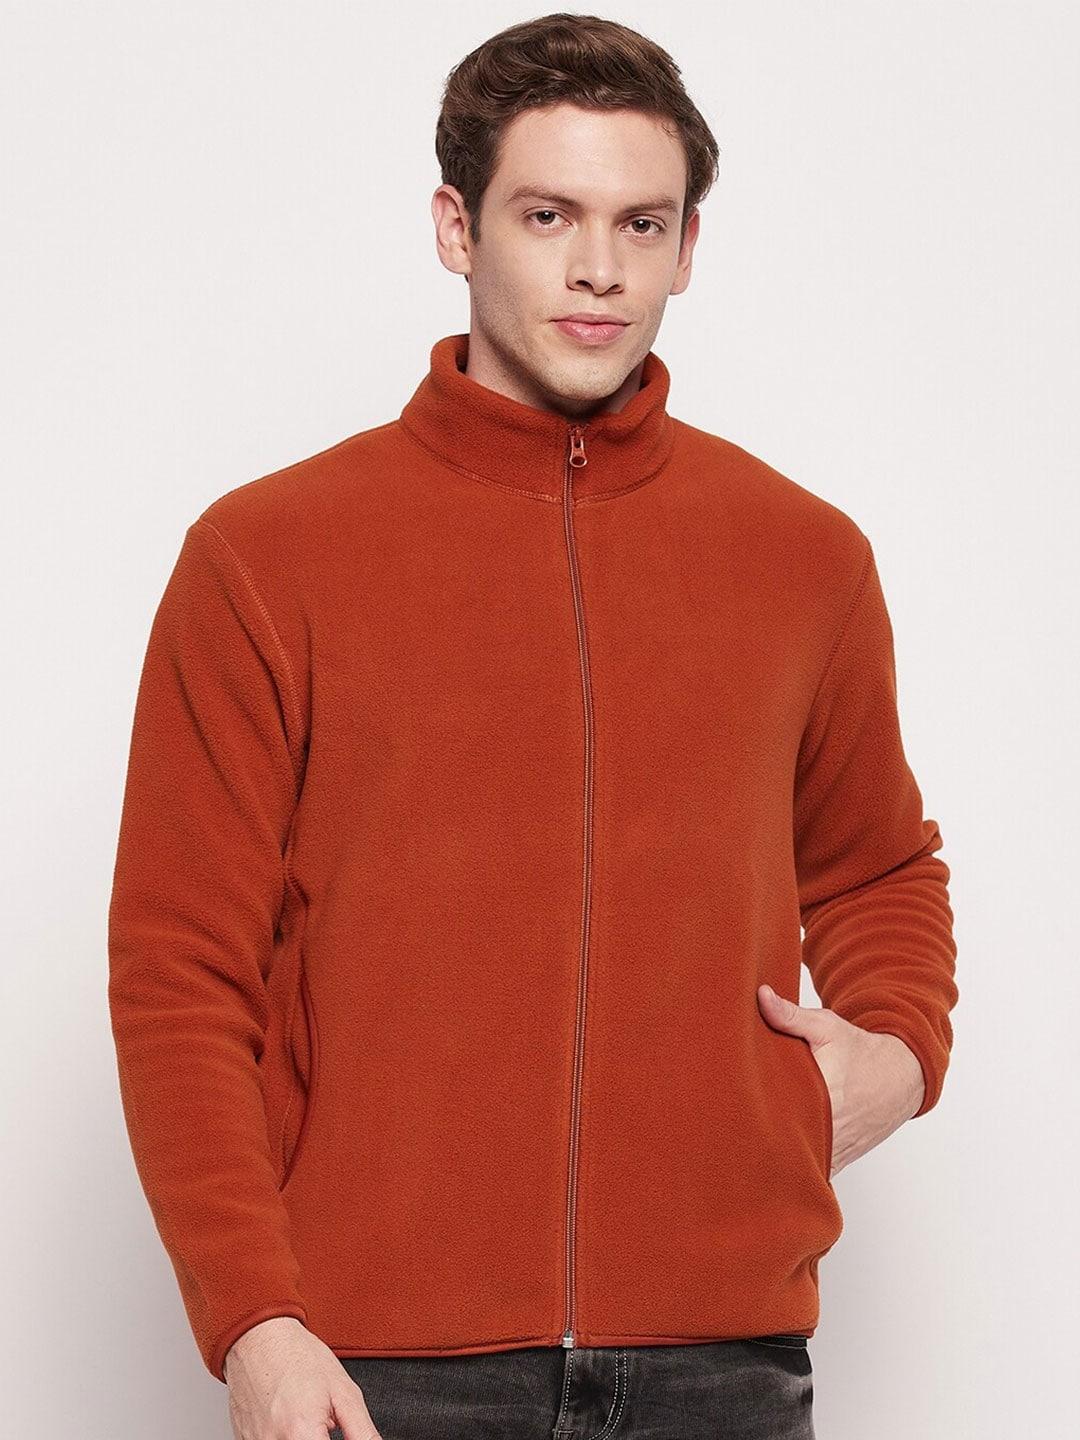 cantabil-mock-collar-front-open-sweatshirt